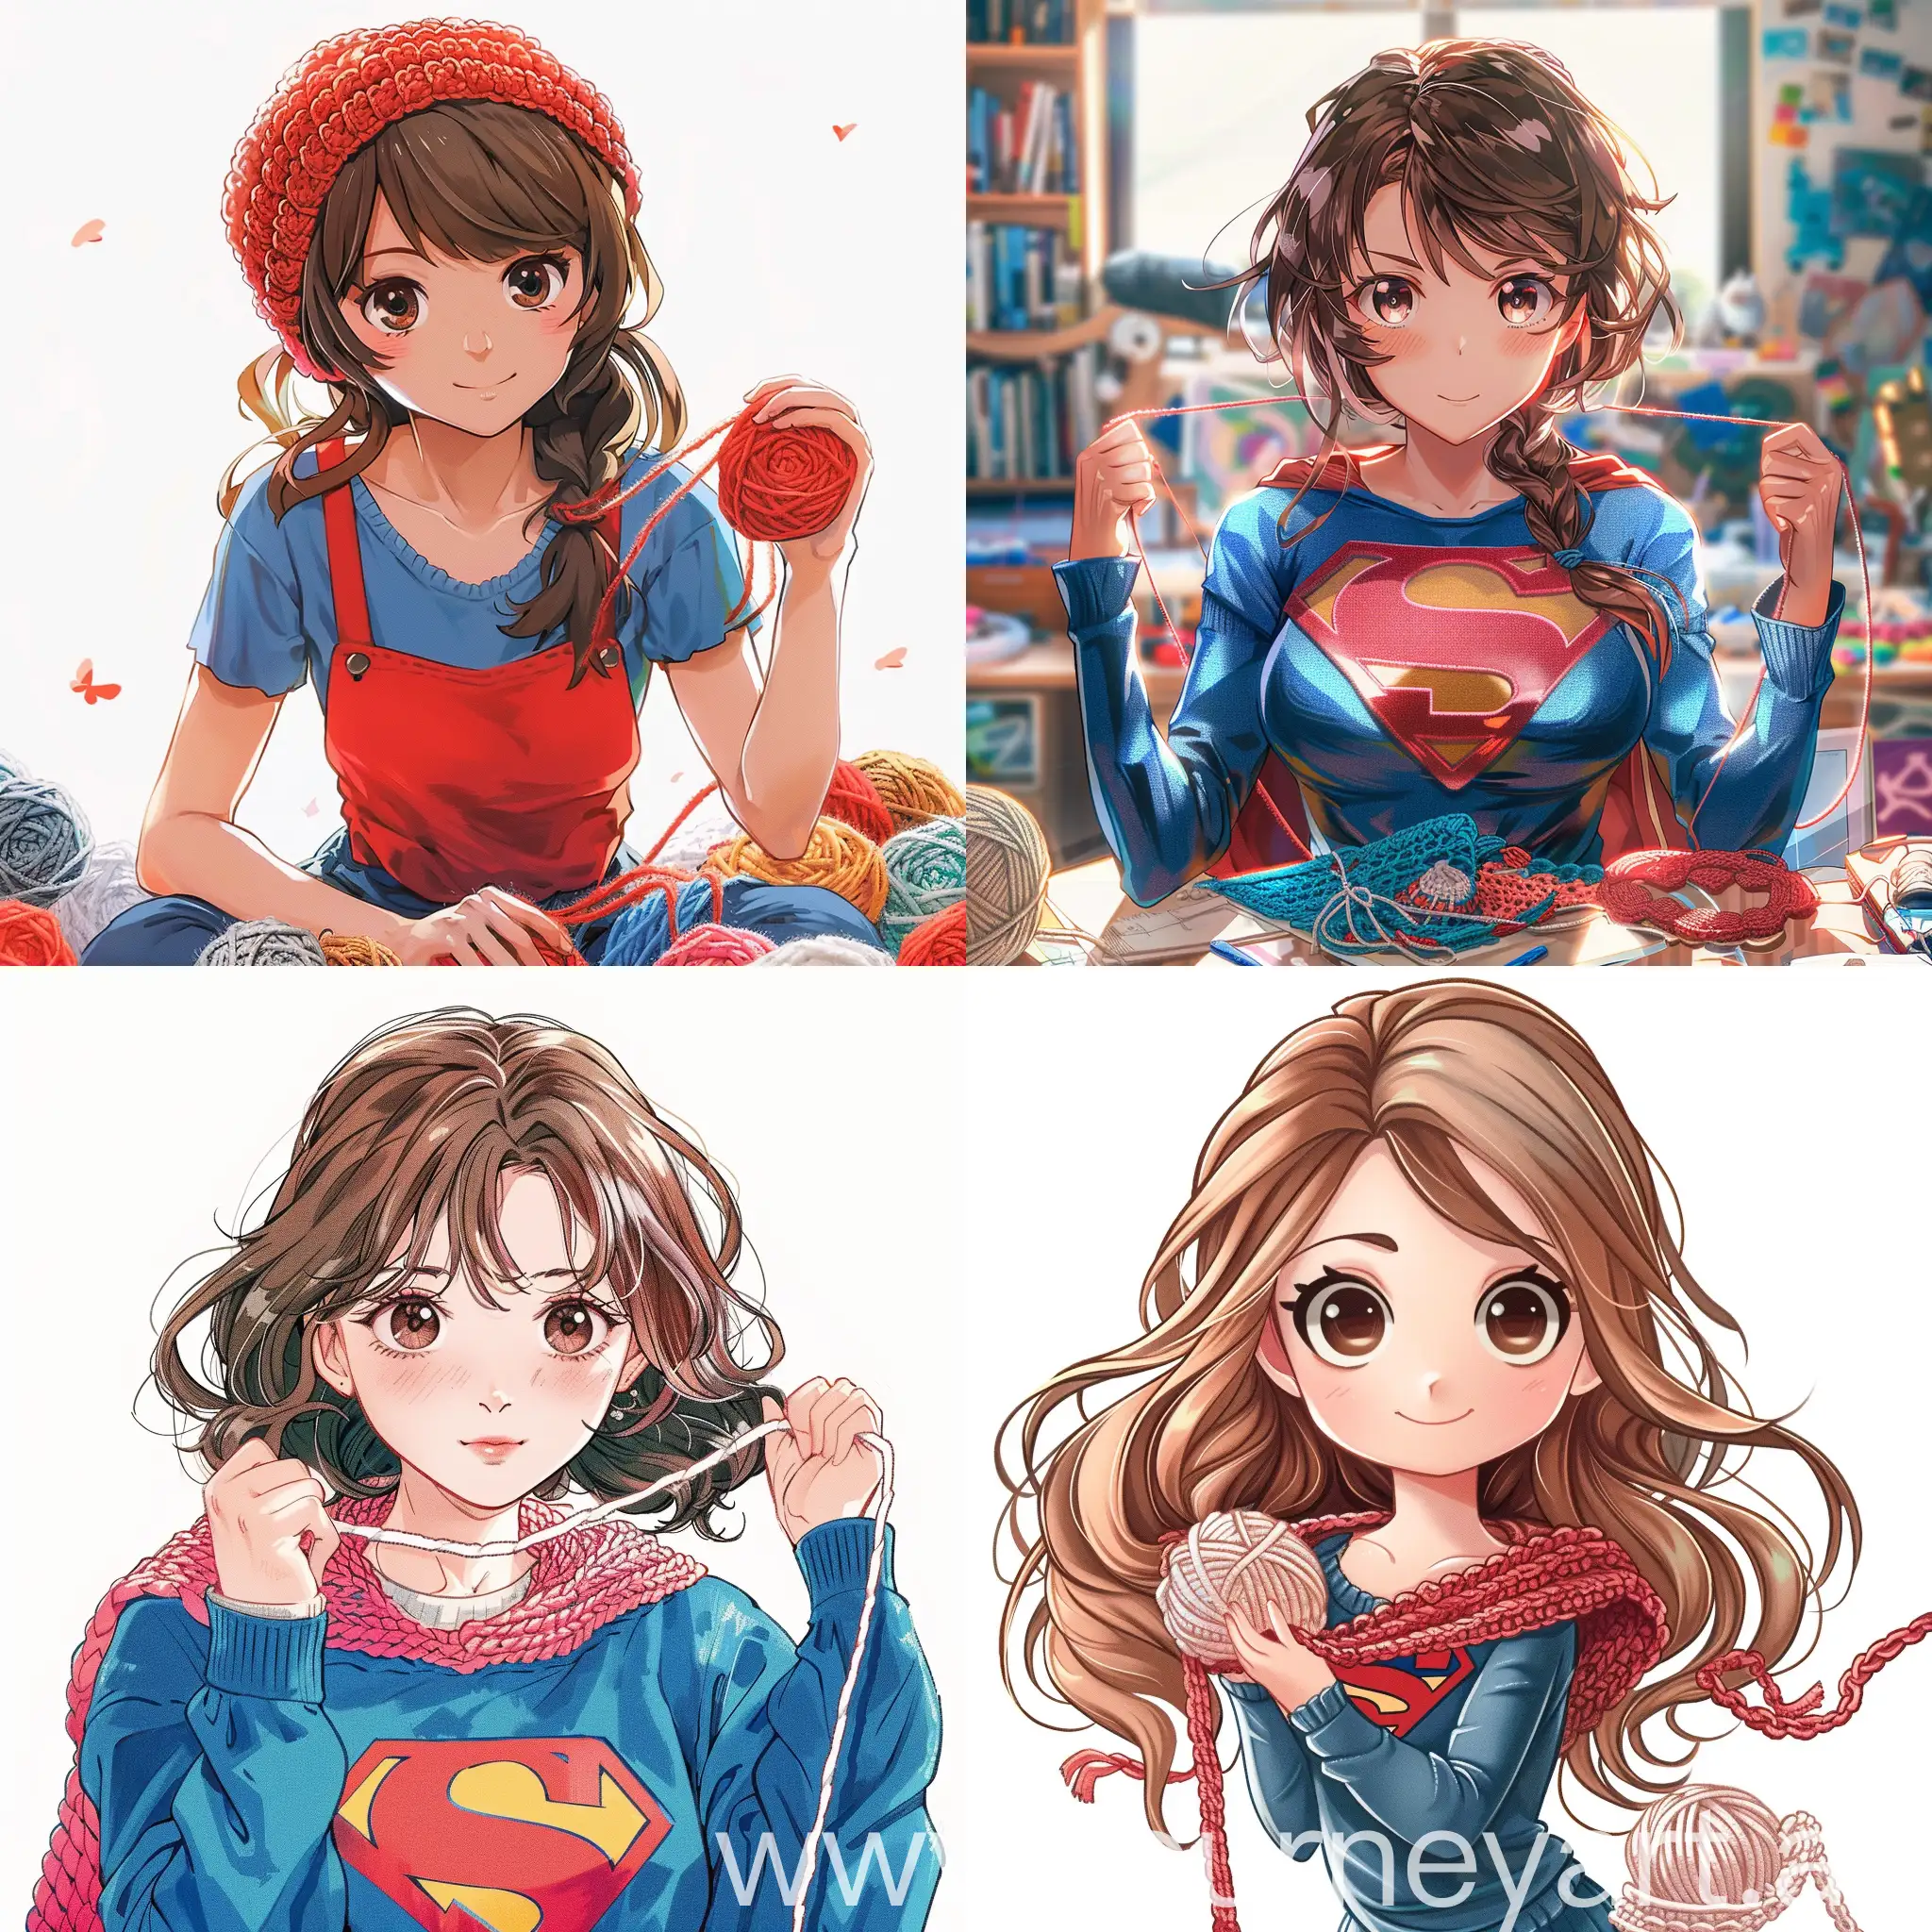 girl whos super power is crochet, anime style
